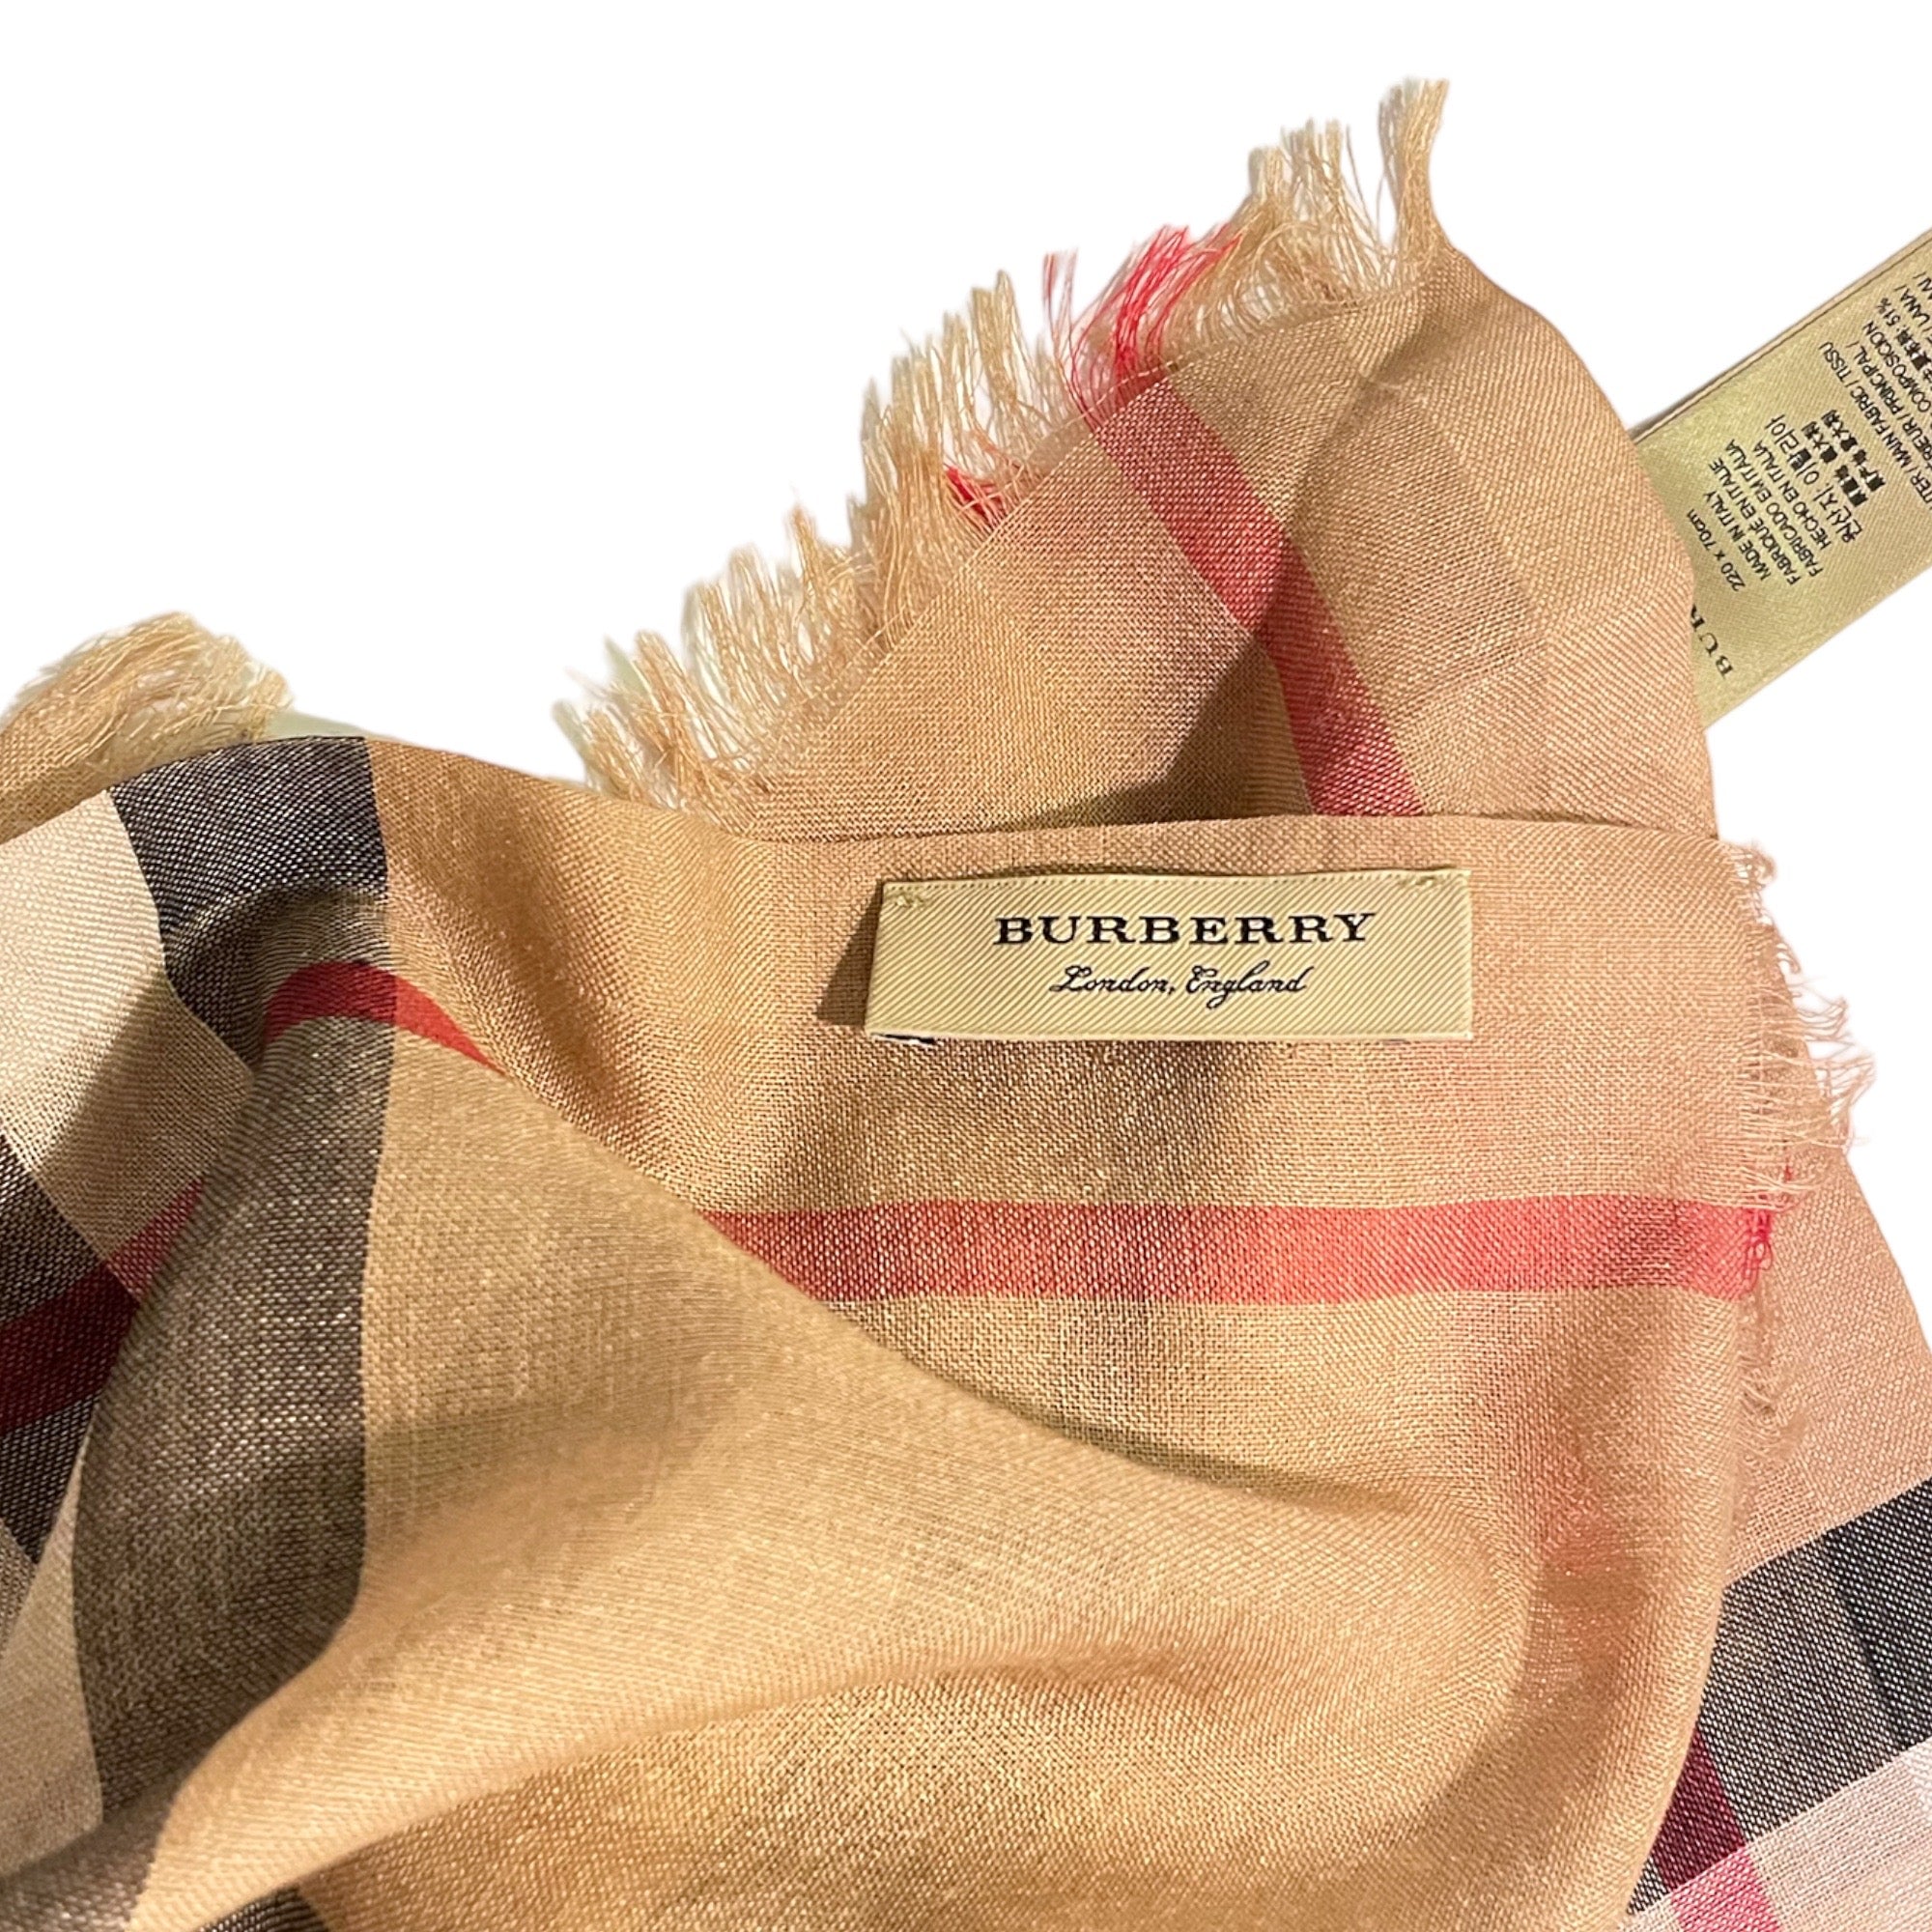 BURBERRY LONDON Check Wool Silk Scarf (220cm x 70cm)